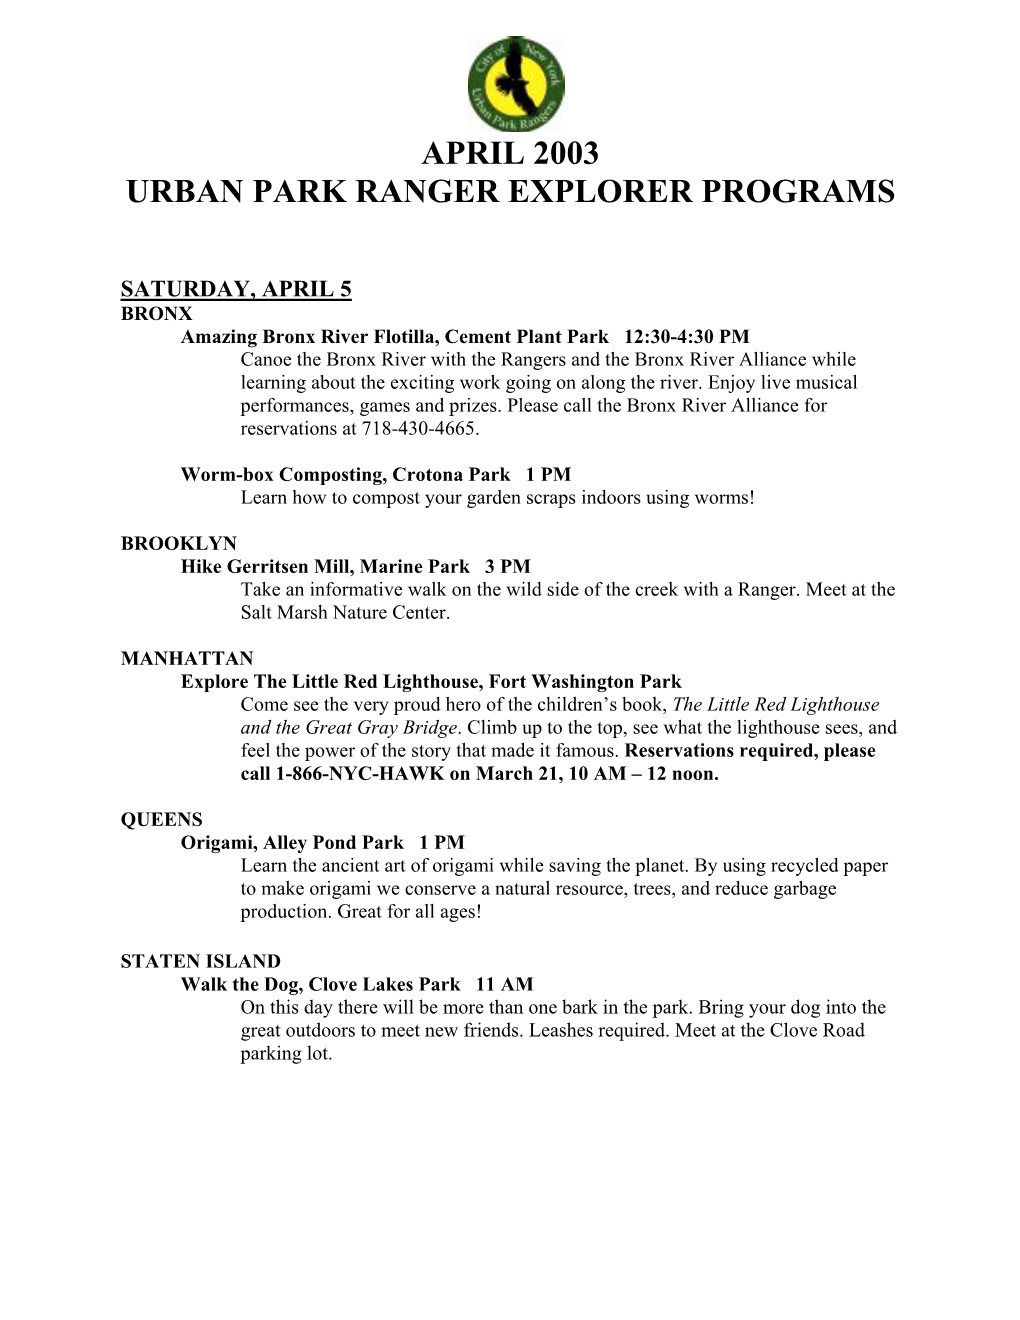 April 2003 Urban Park Ranger Explorer Programs